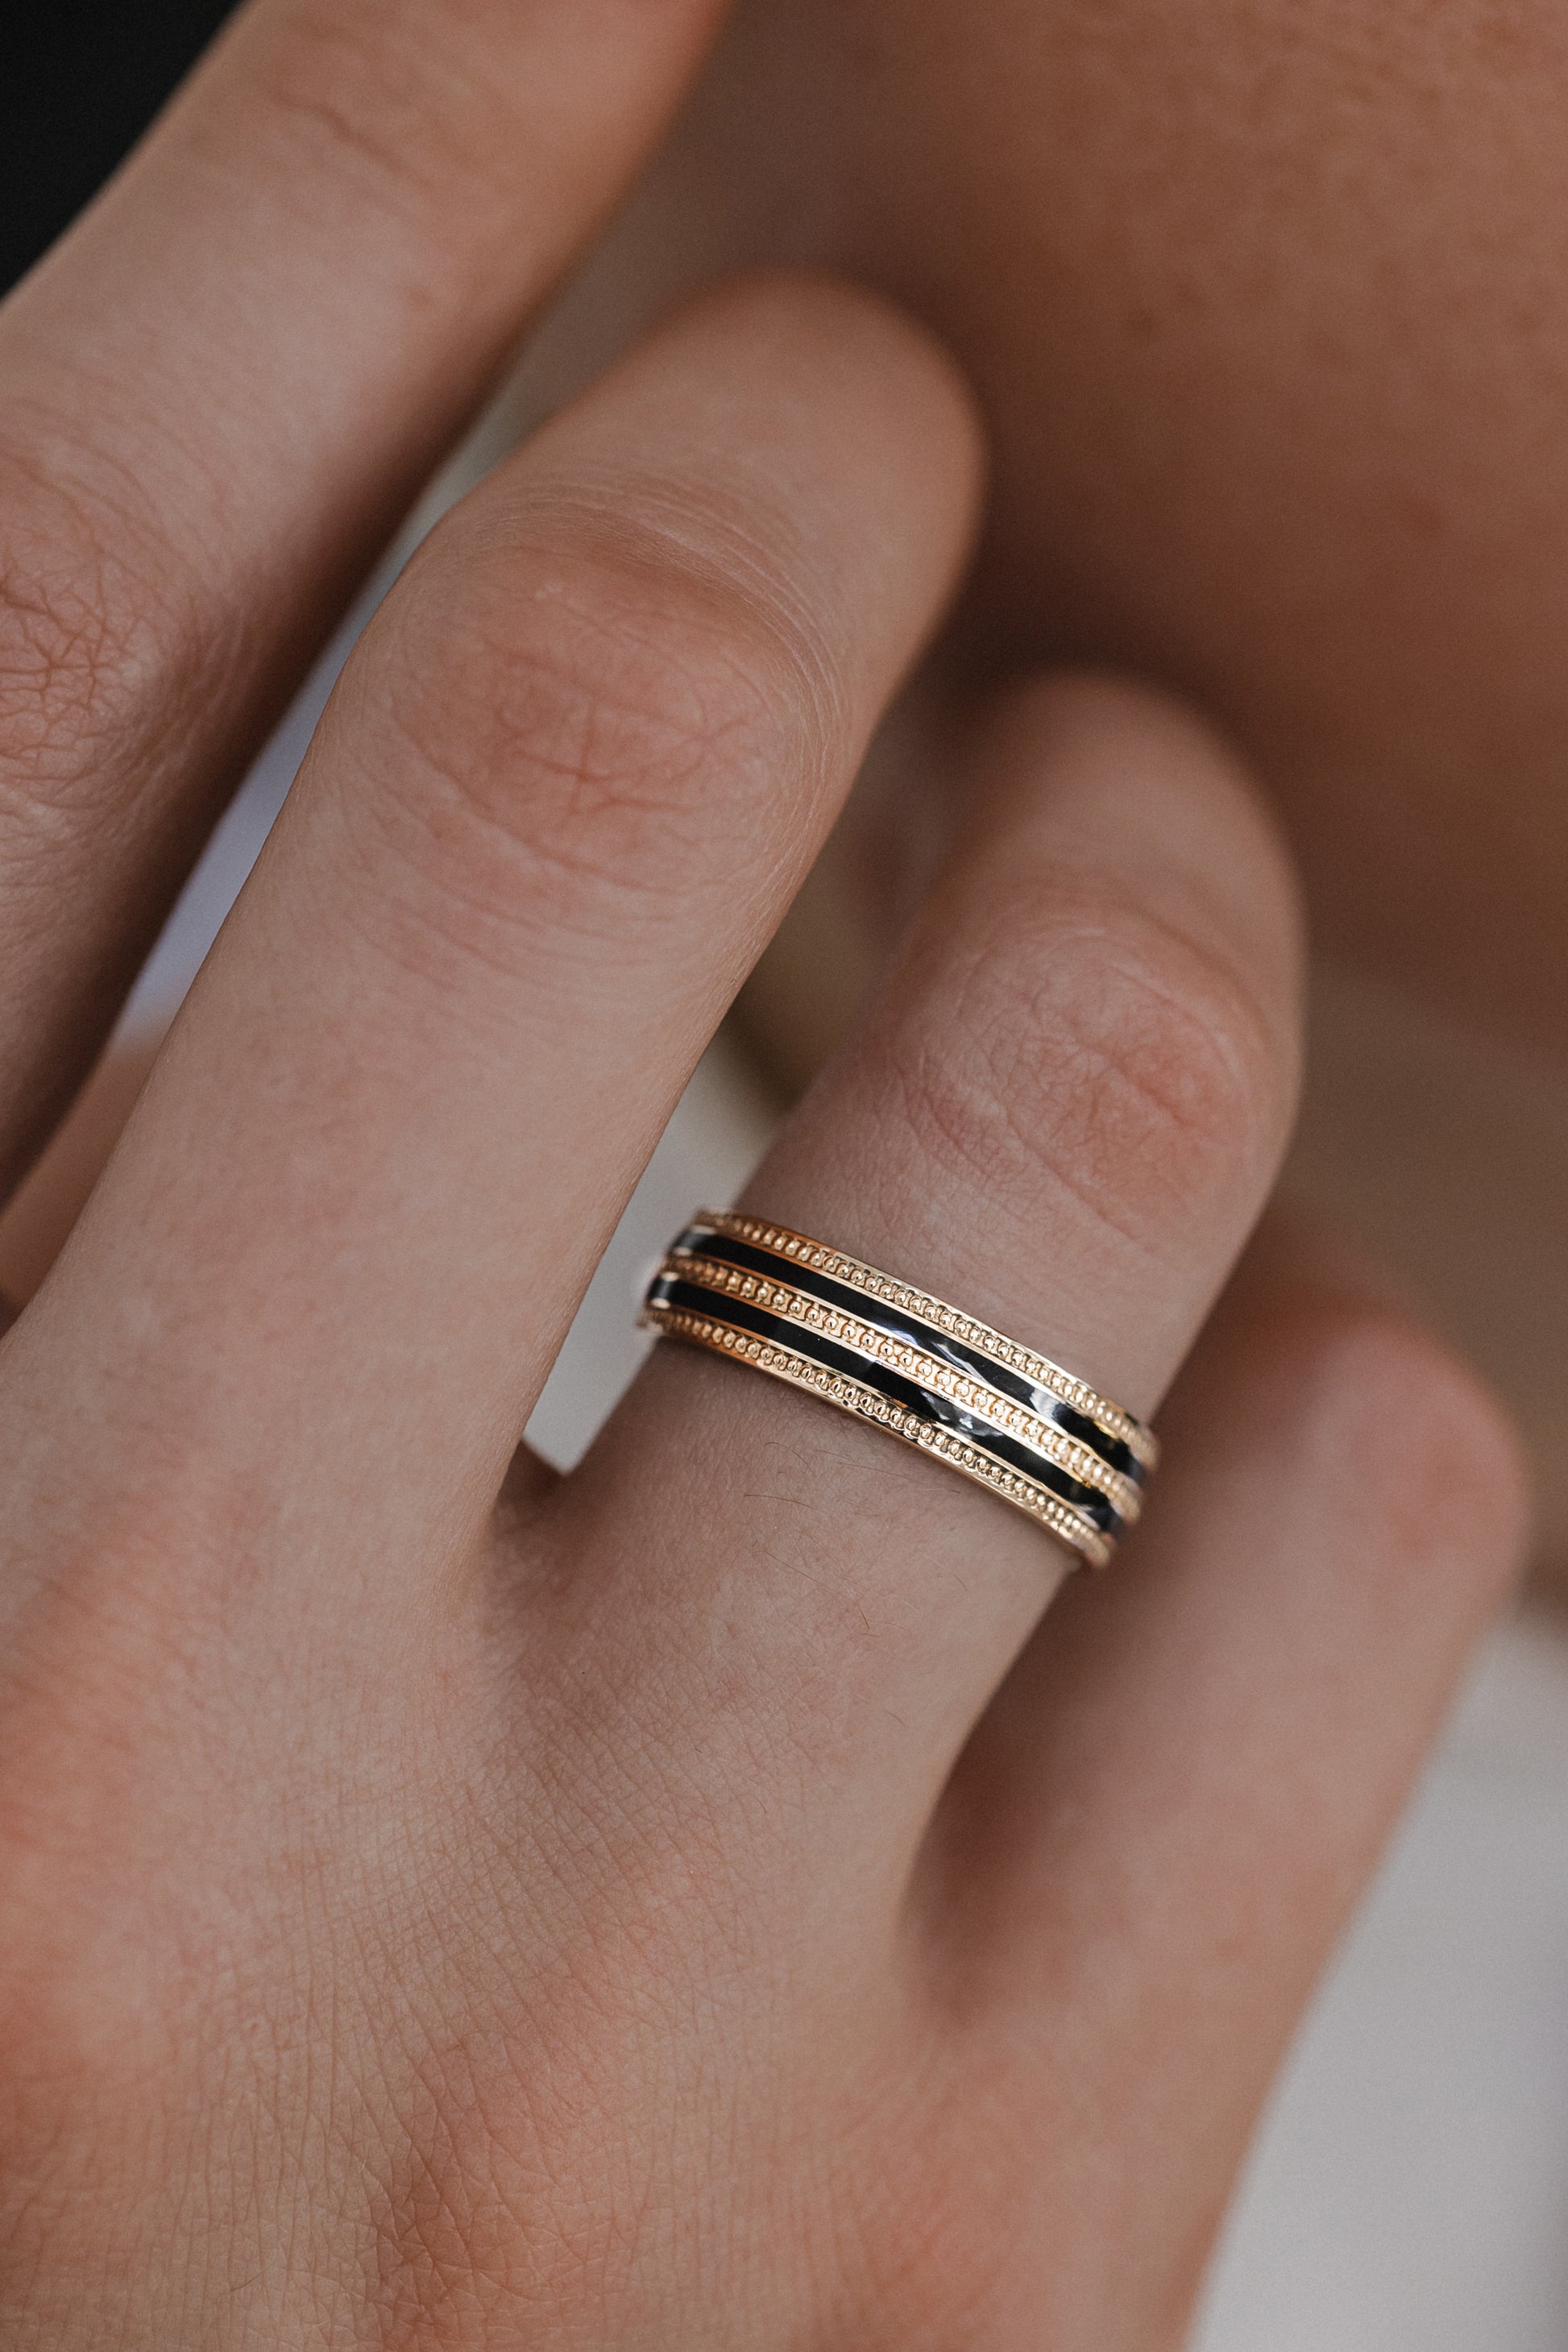 Unique gold wedding bands with white and black enamel. Couple wedding rings. Matching wedding bands. His and hers wedding rings set. Unique gold rings set.